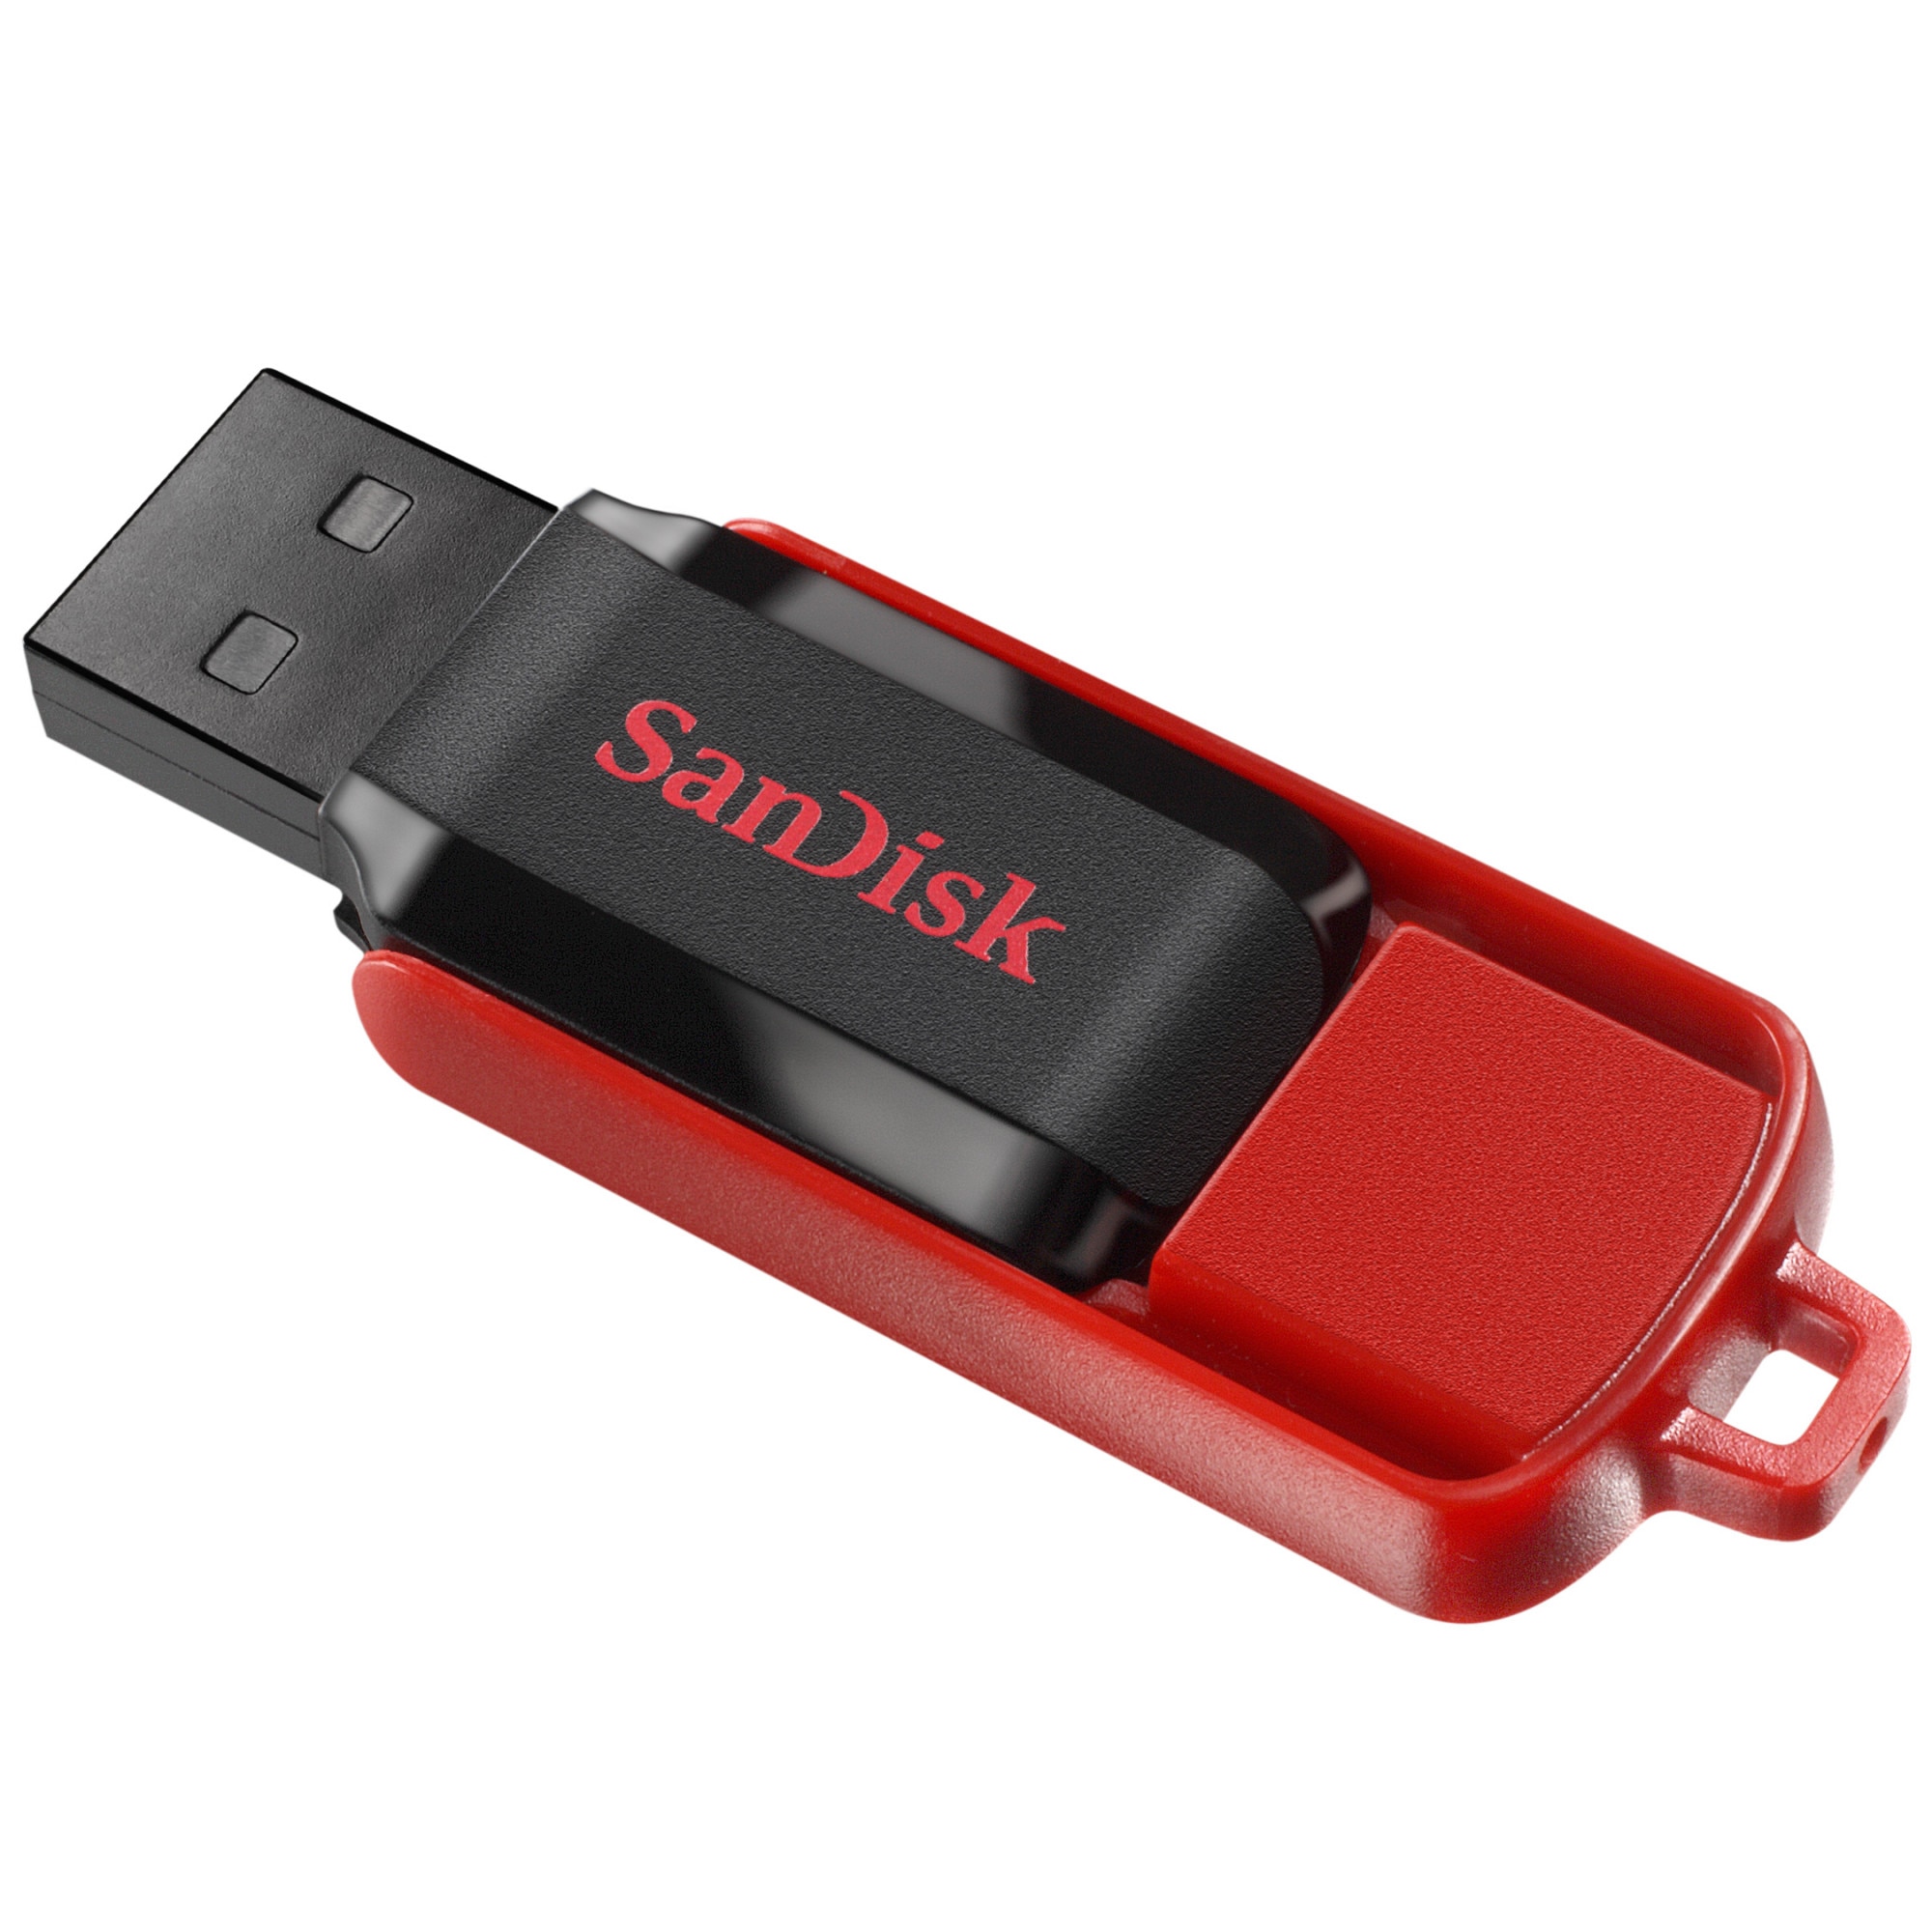 Купить флешку sandisk. Флешка САНДИСК 64 ГБ. Флешка SANDISK 32gb. Флешка САНДИСК 32 ГБ. USB-флешка SANDISK 8 GB.